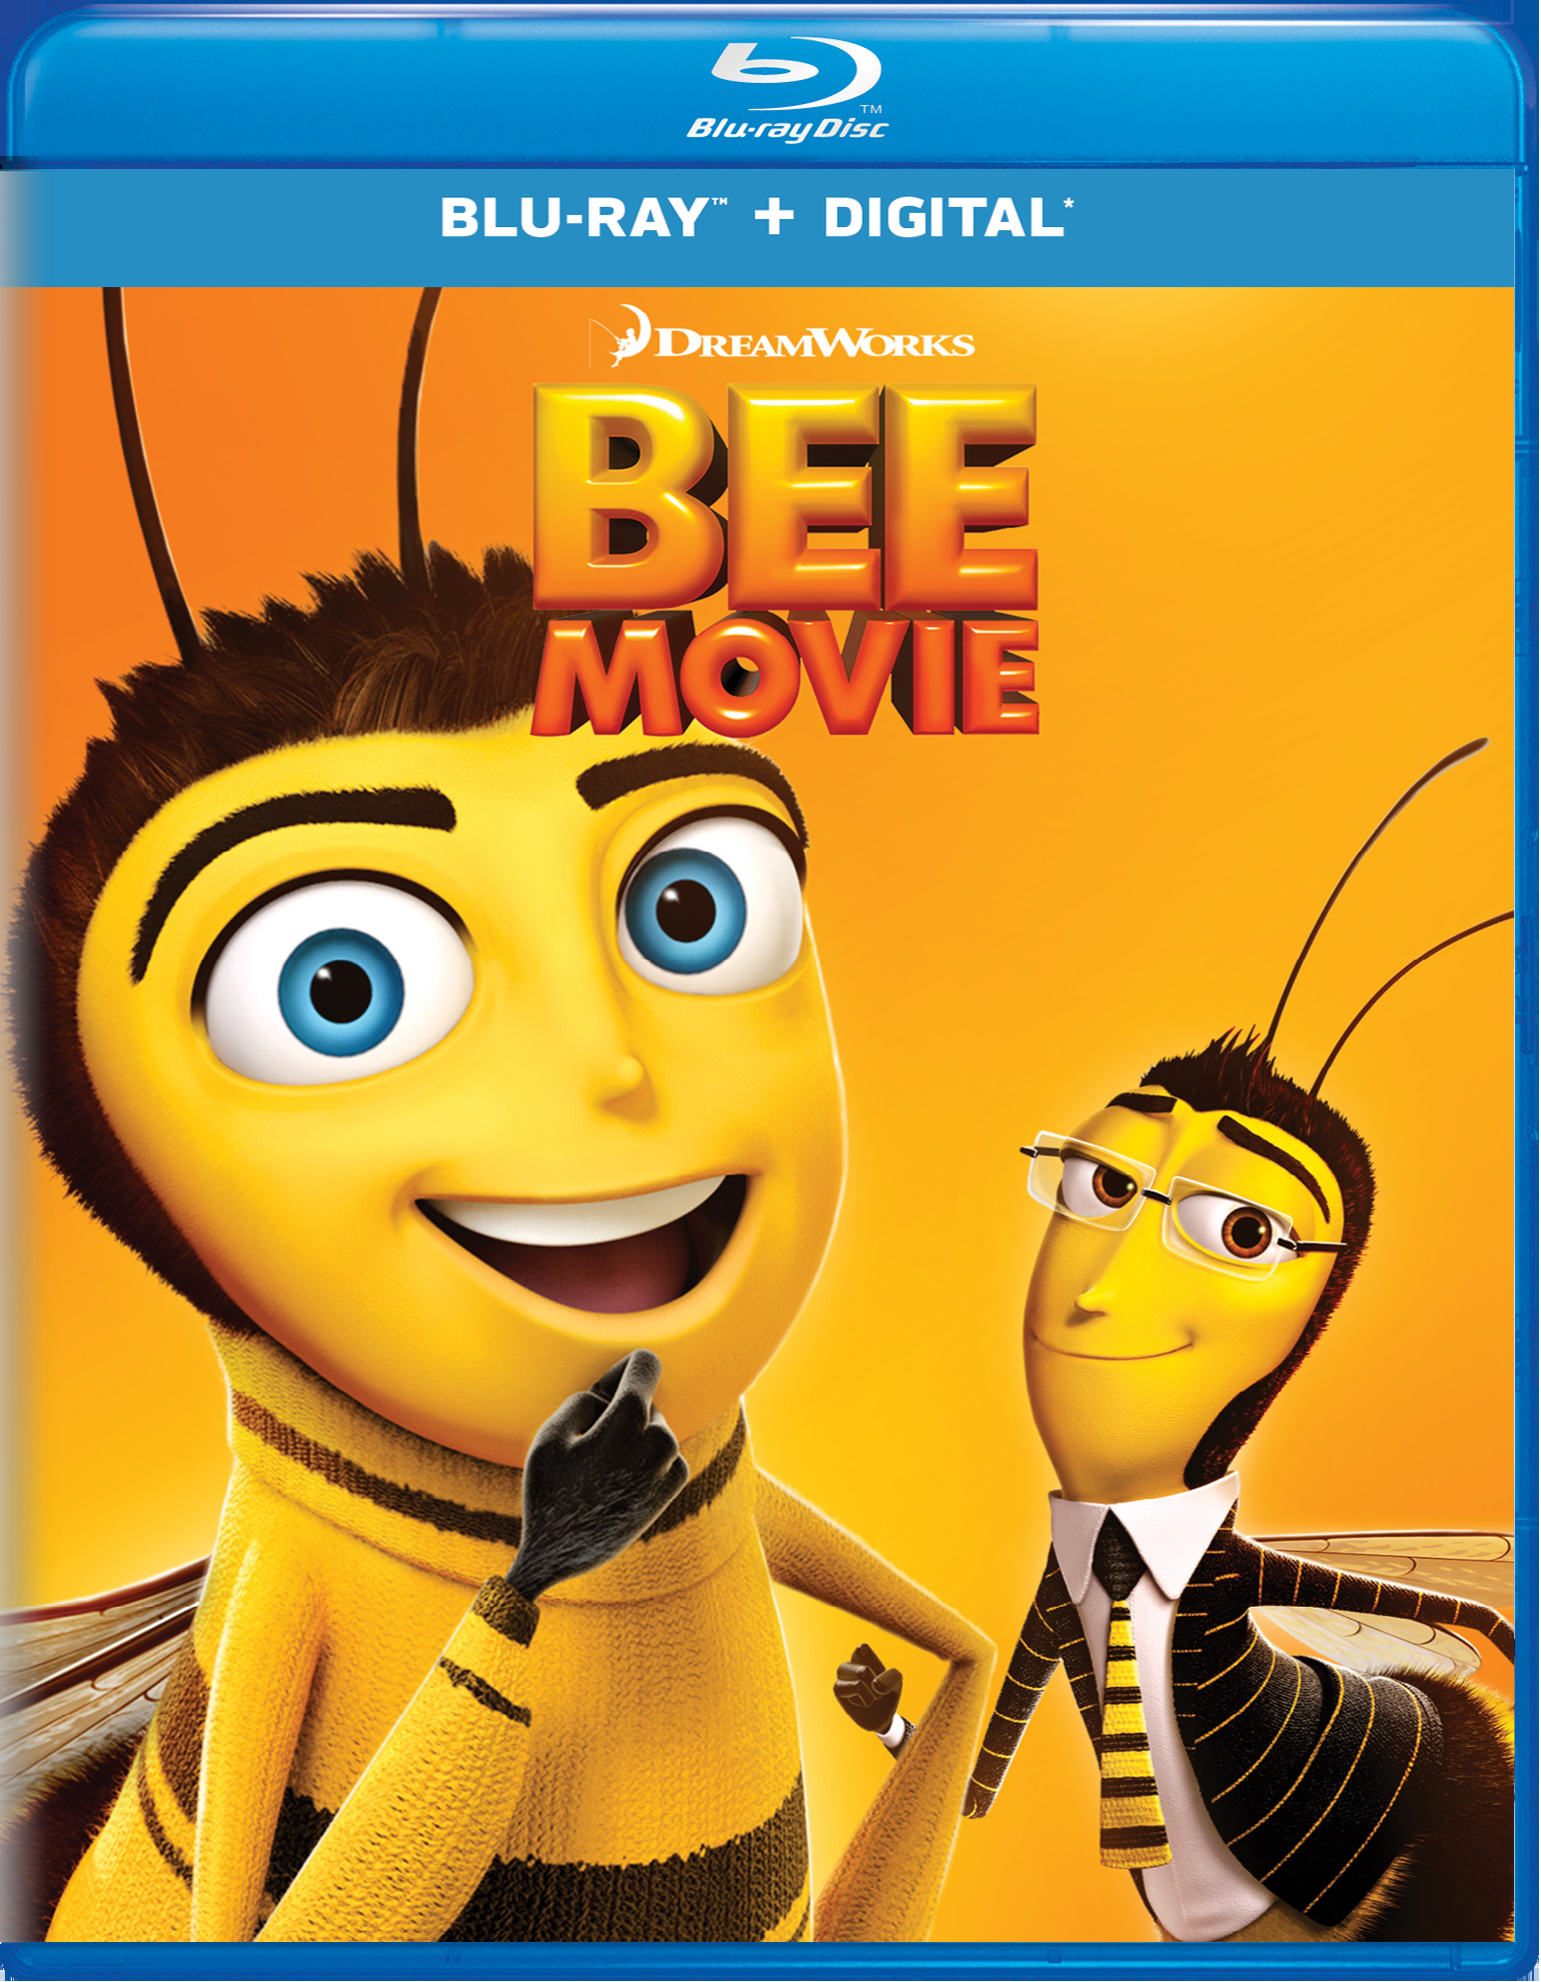 Bee Movie (Blu-ray New Box Art) - Blu-ray [ 2007 ]  - Children Movies On Blu-ray - Movies On GRUV